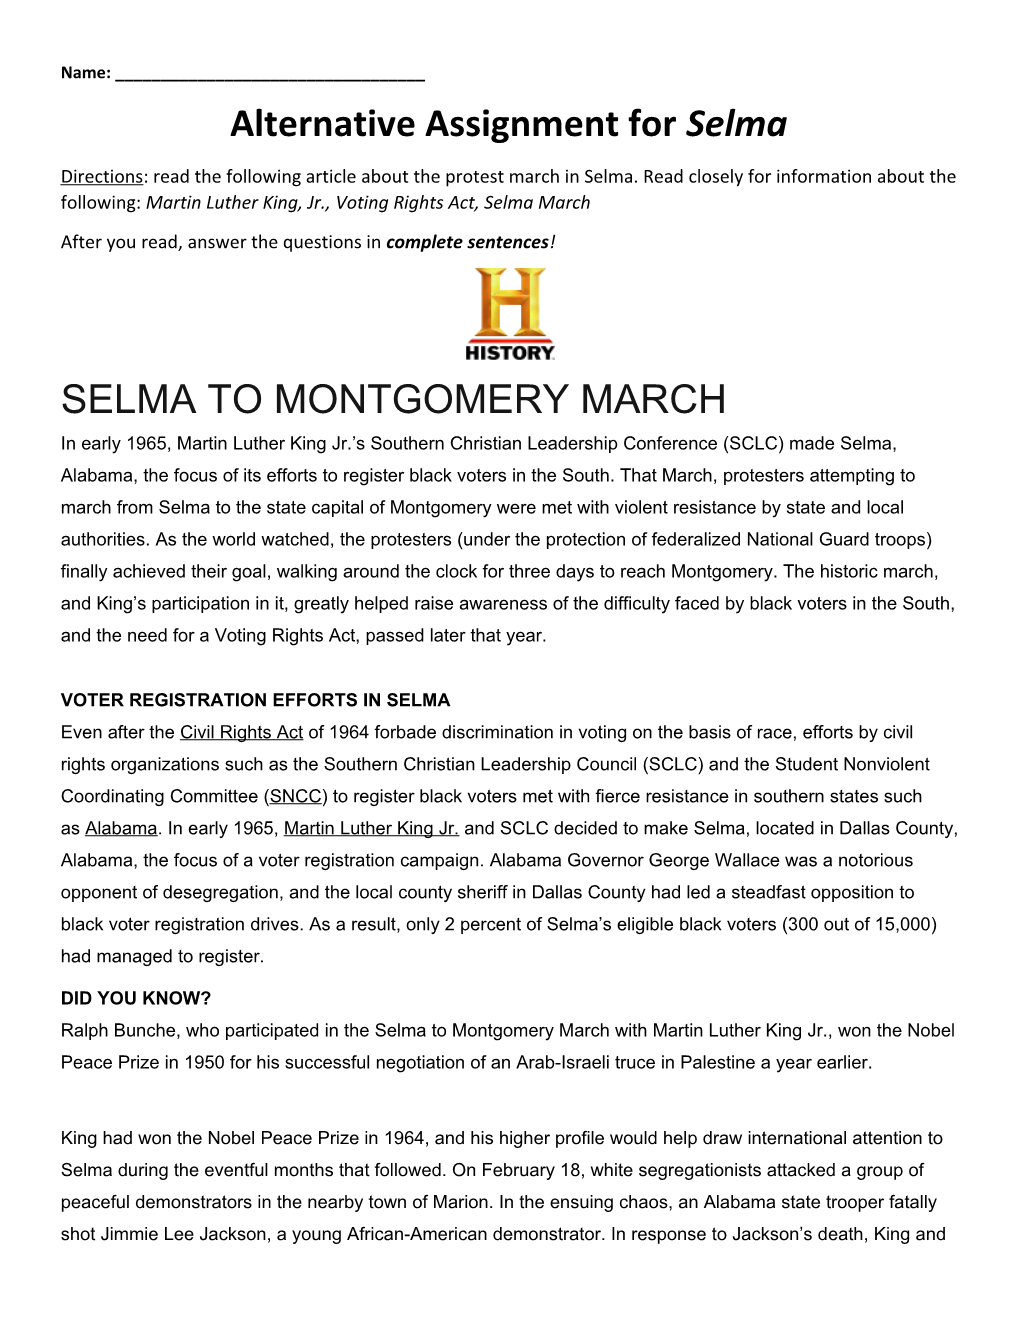 Alternative Assignment for Selma